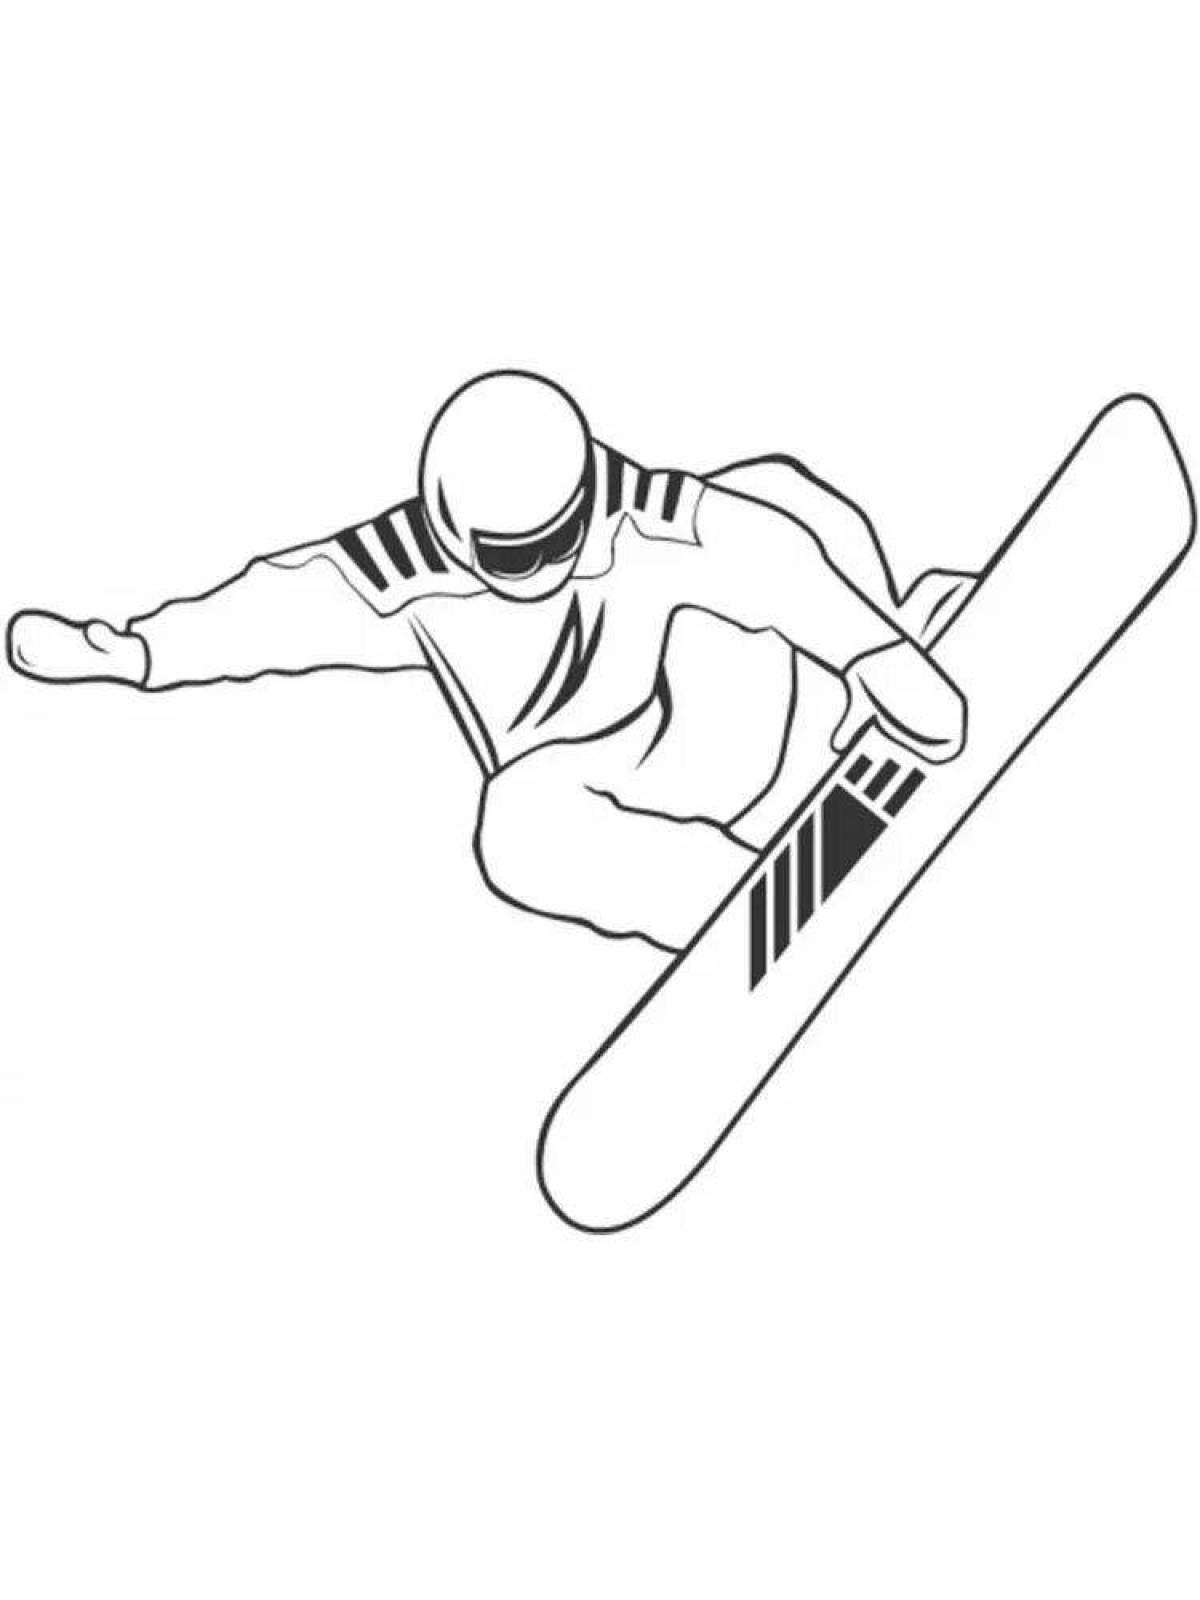 Snowboard #2